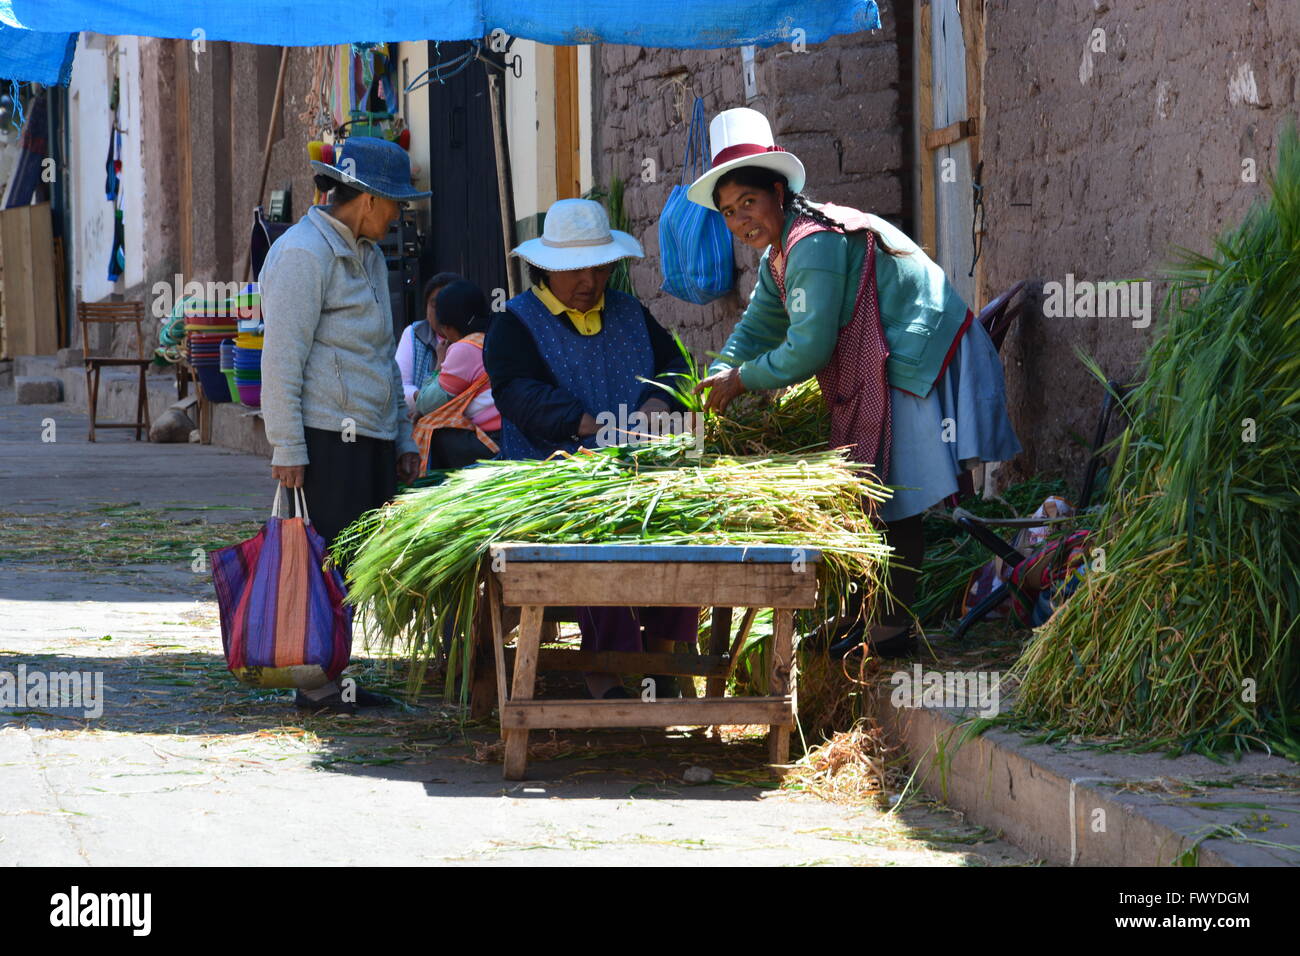 A vendor on the streets of Urubamba Peru. Stock Photo